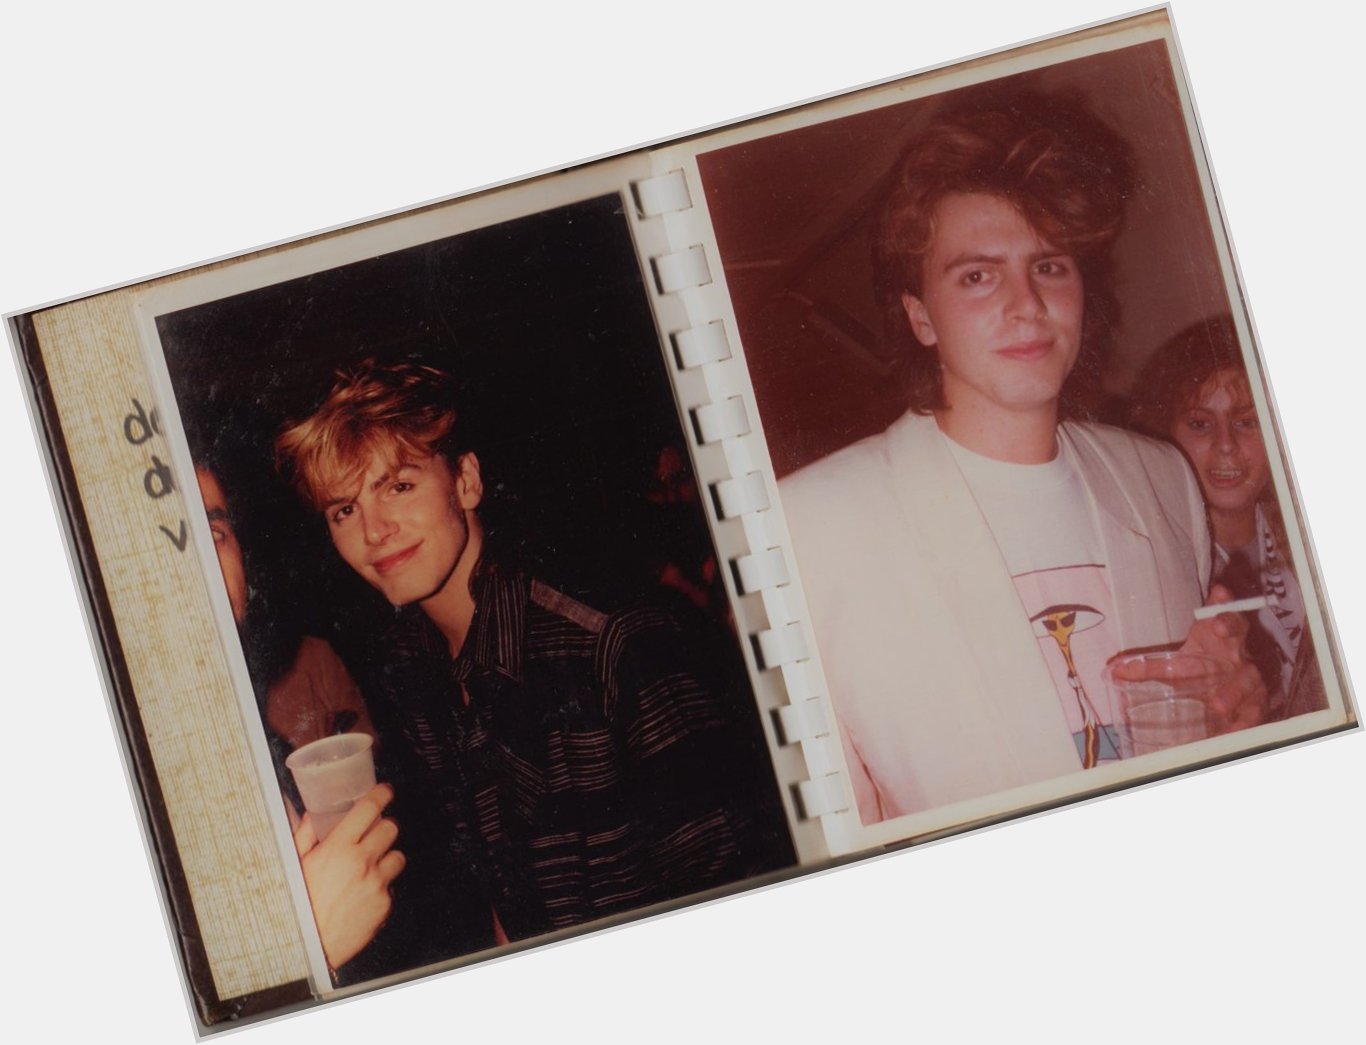 Pics from my 1984 photo album of John Taylor. HAPPY BIRTHDAY!  